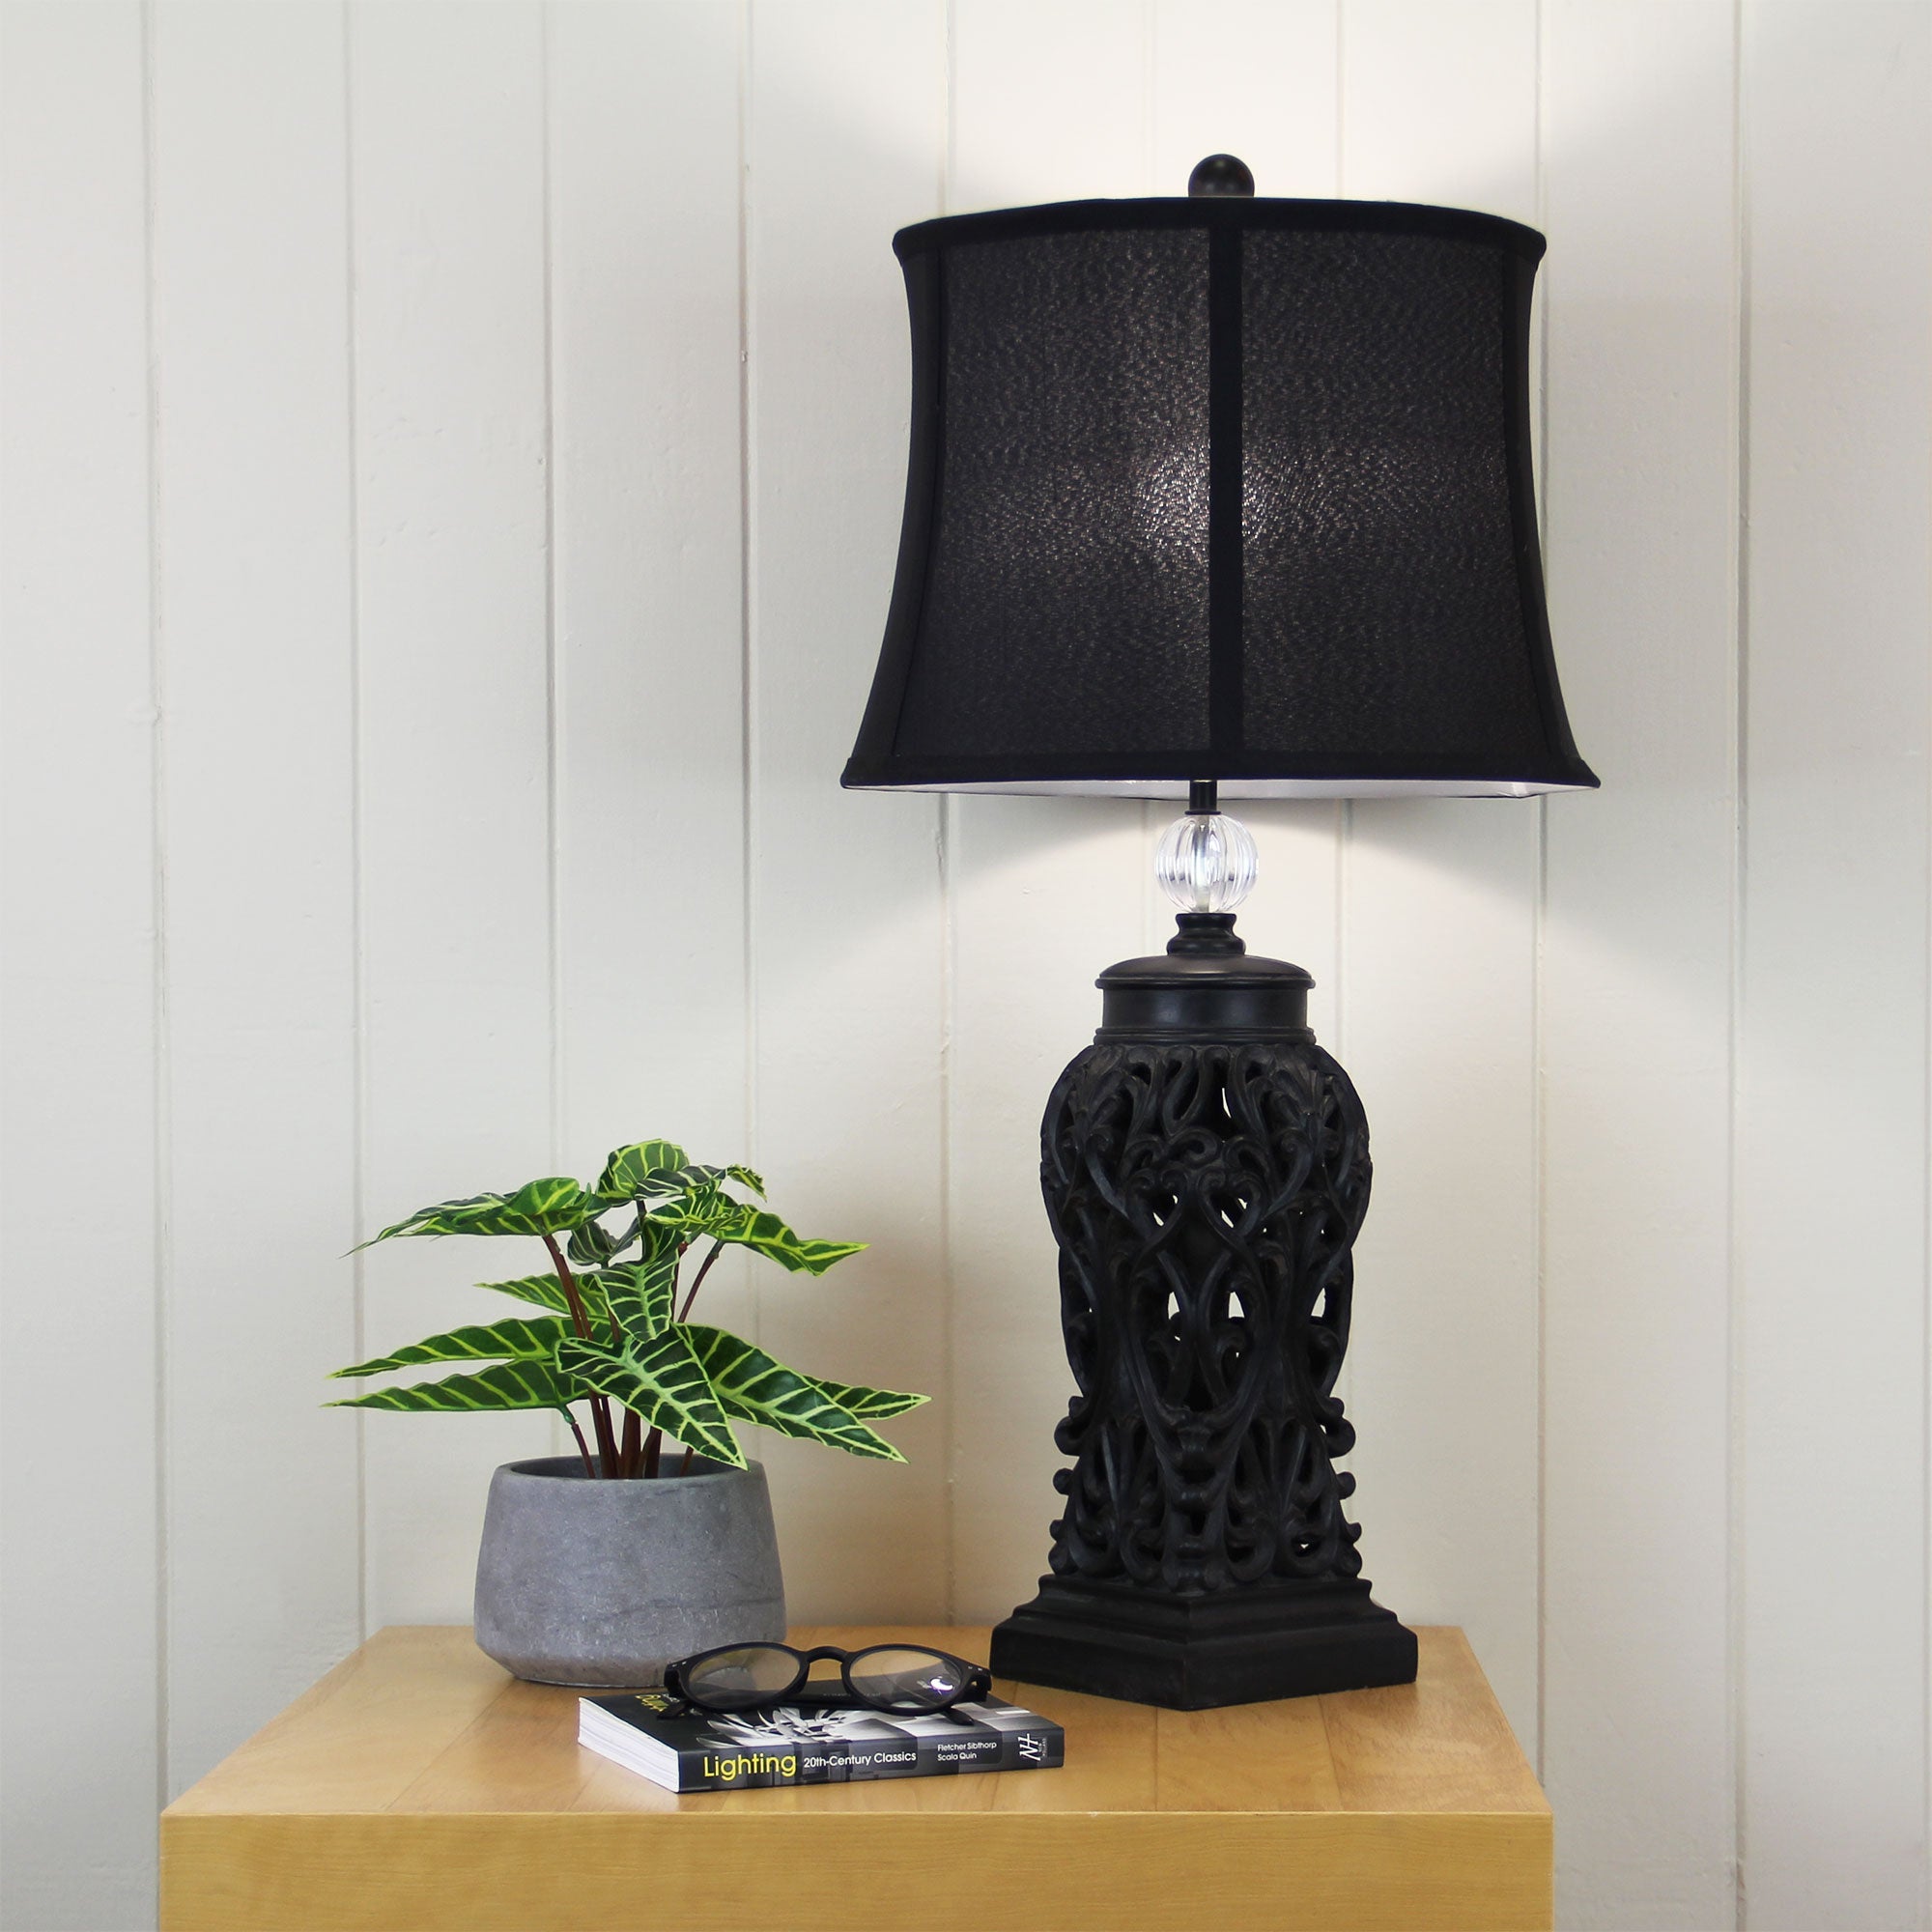 Dorne Antique Black Cut 1 Light Table Lamp With Harp Shade - OL97976BK